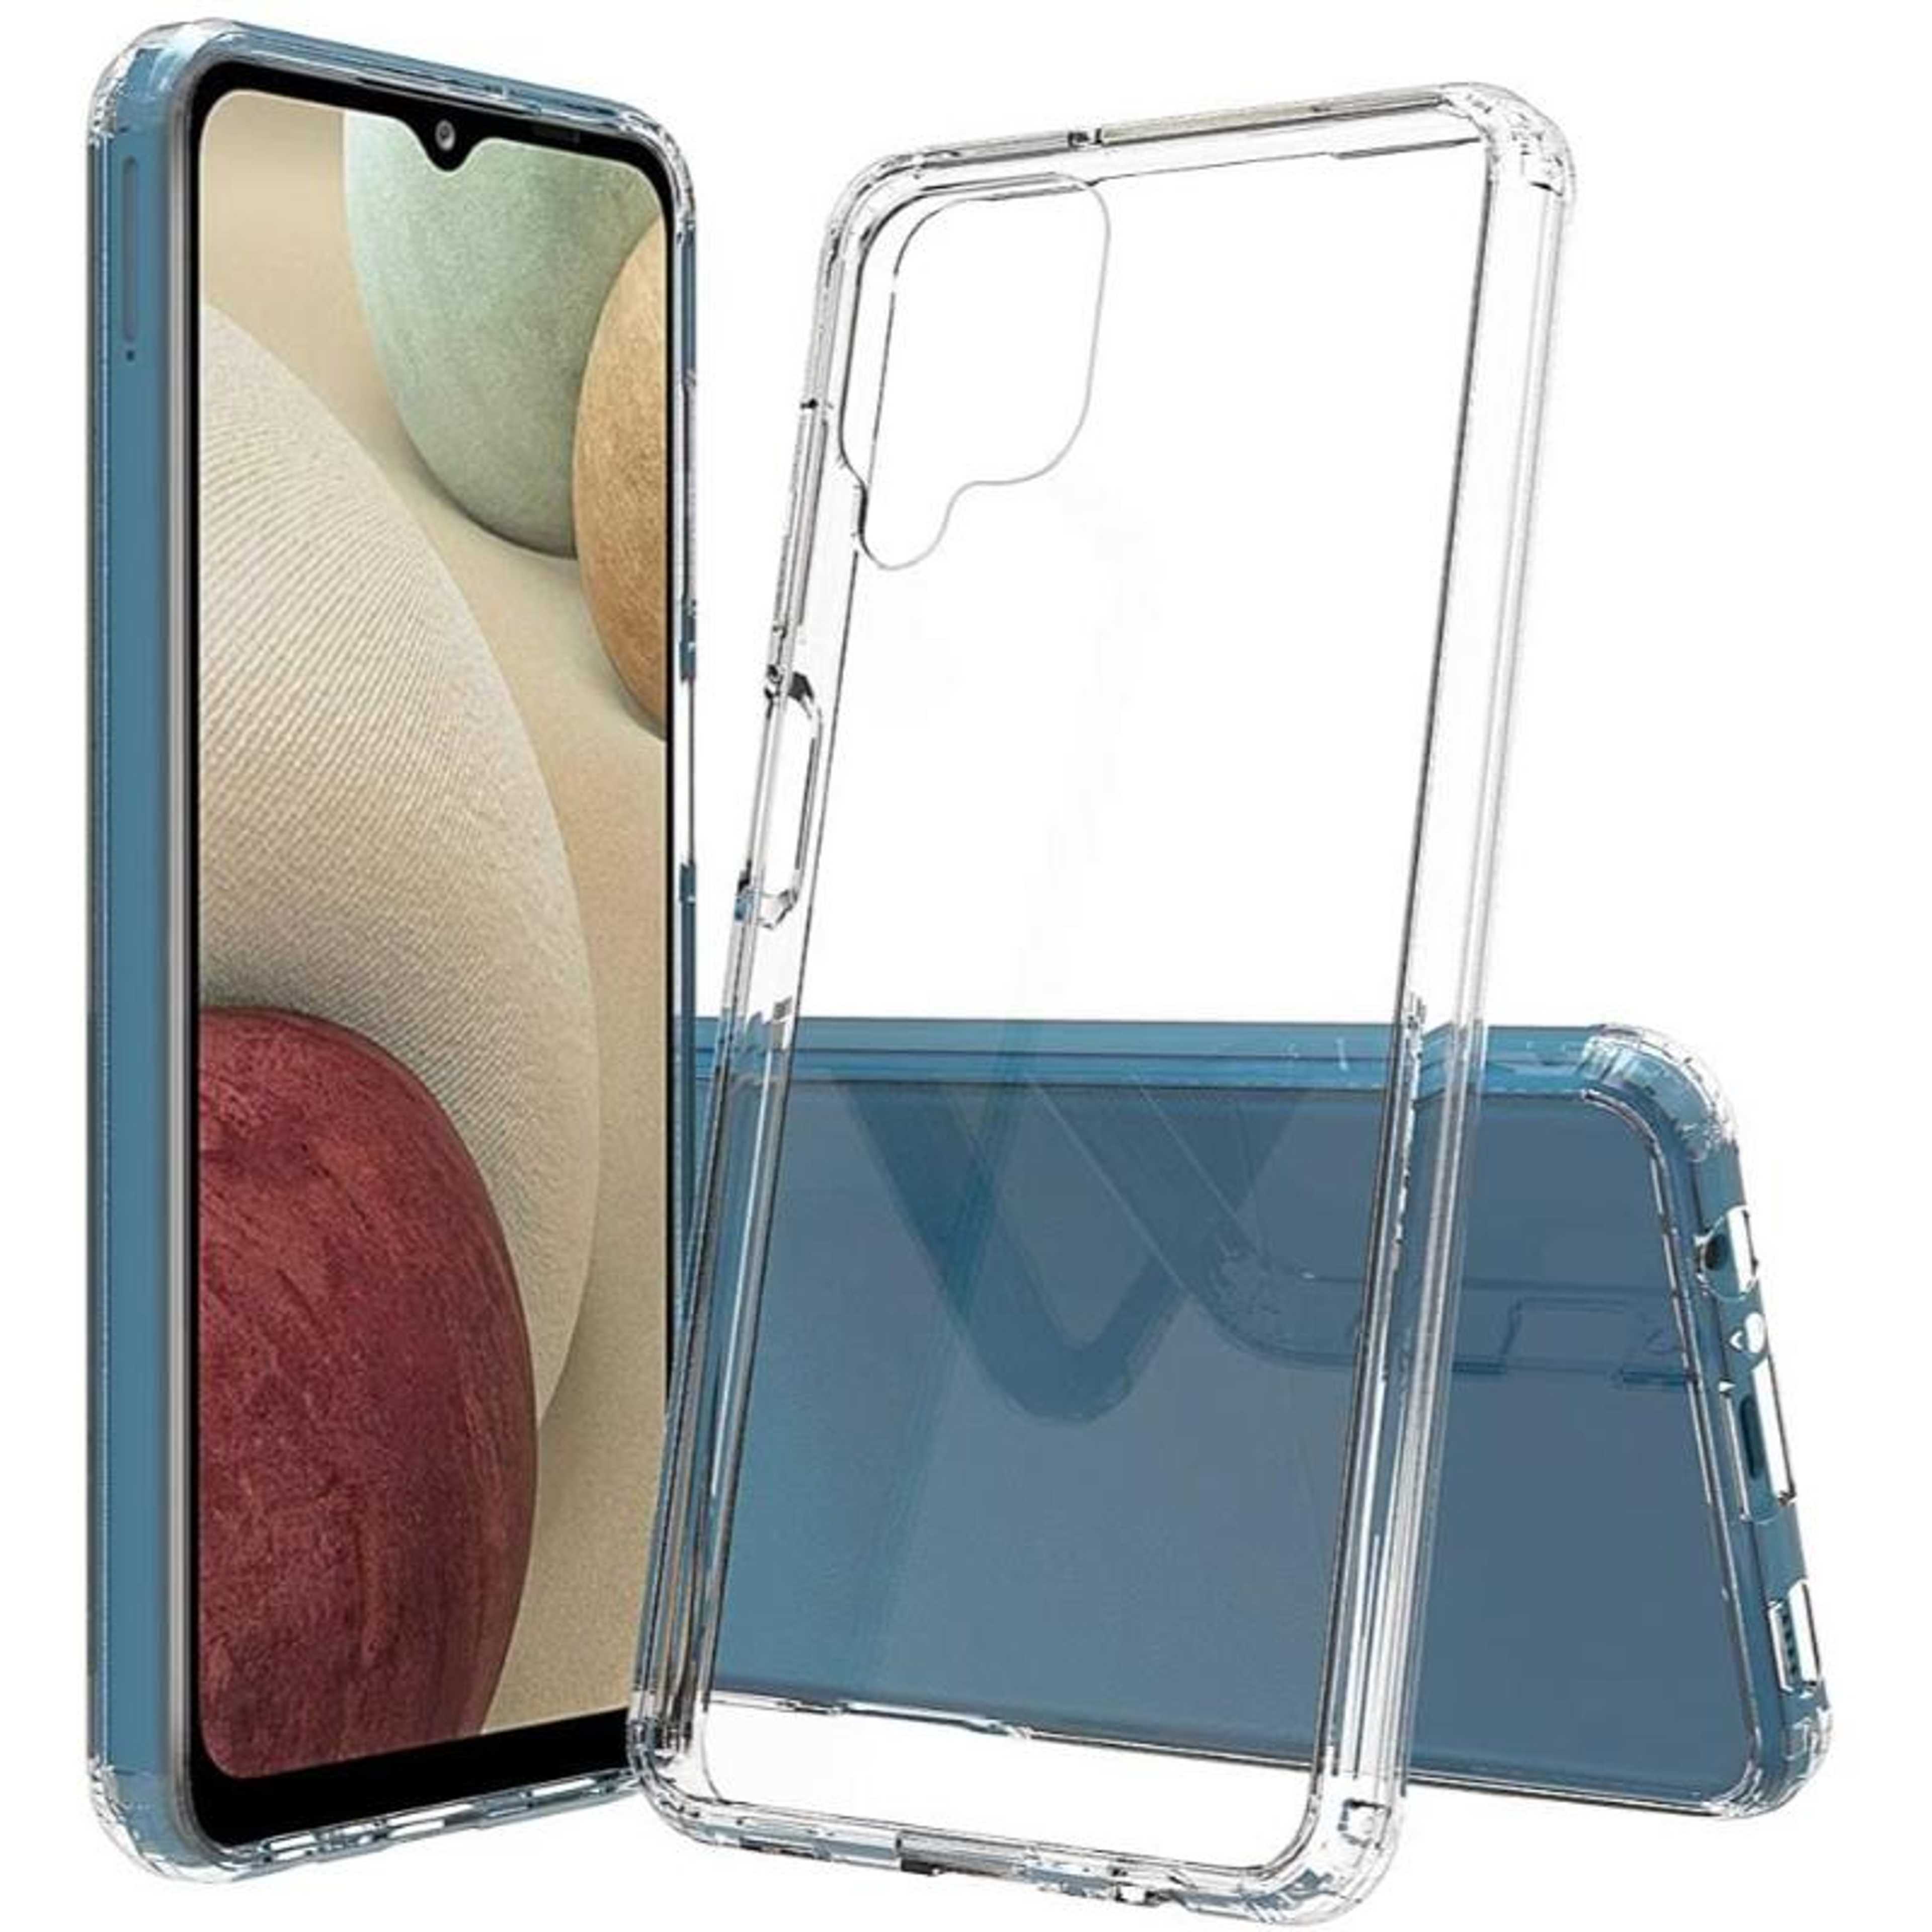 Samsung A12 Case Premium Clear TPU Bumper Cover for Samsung Galaxy A12